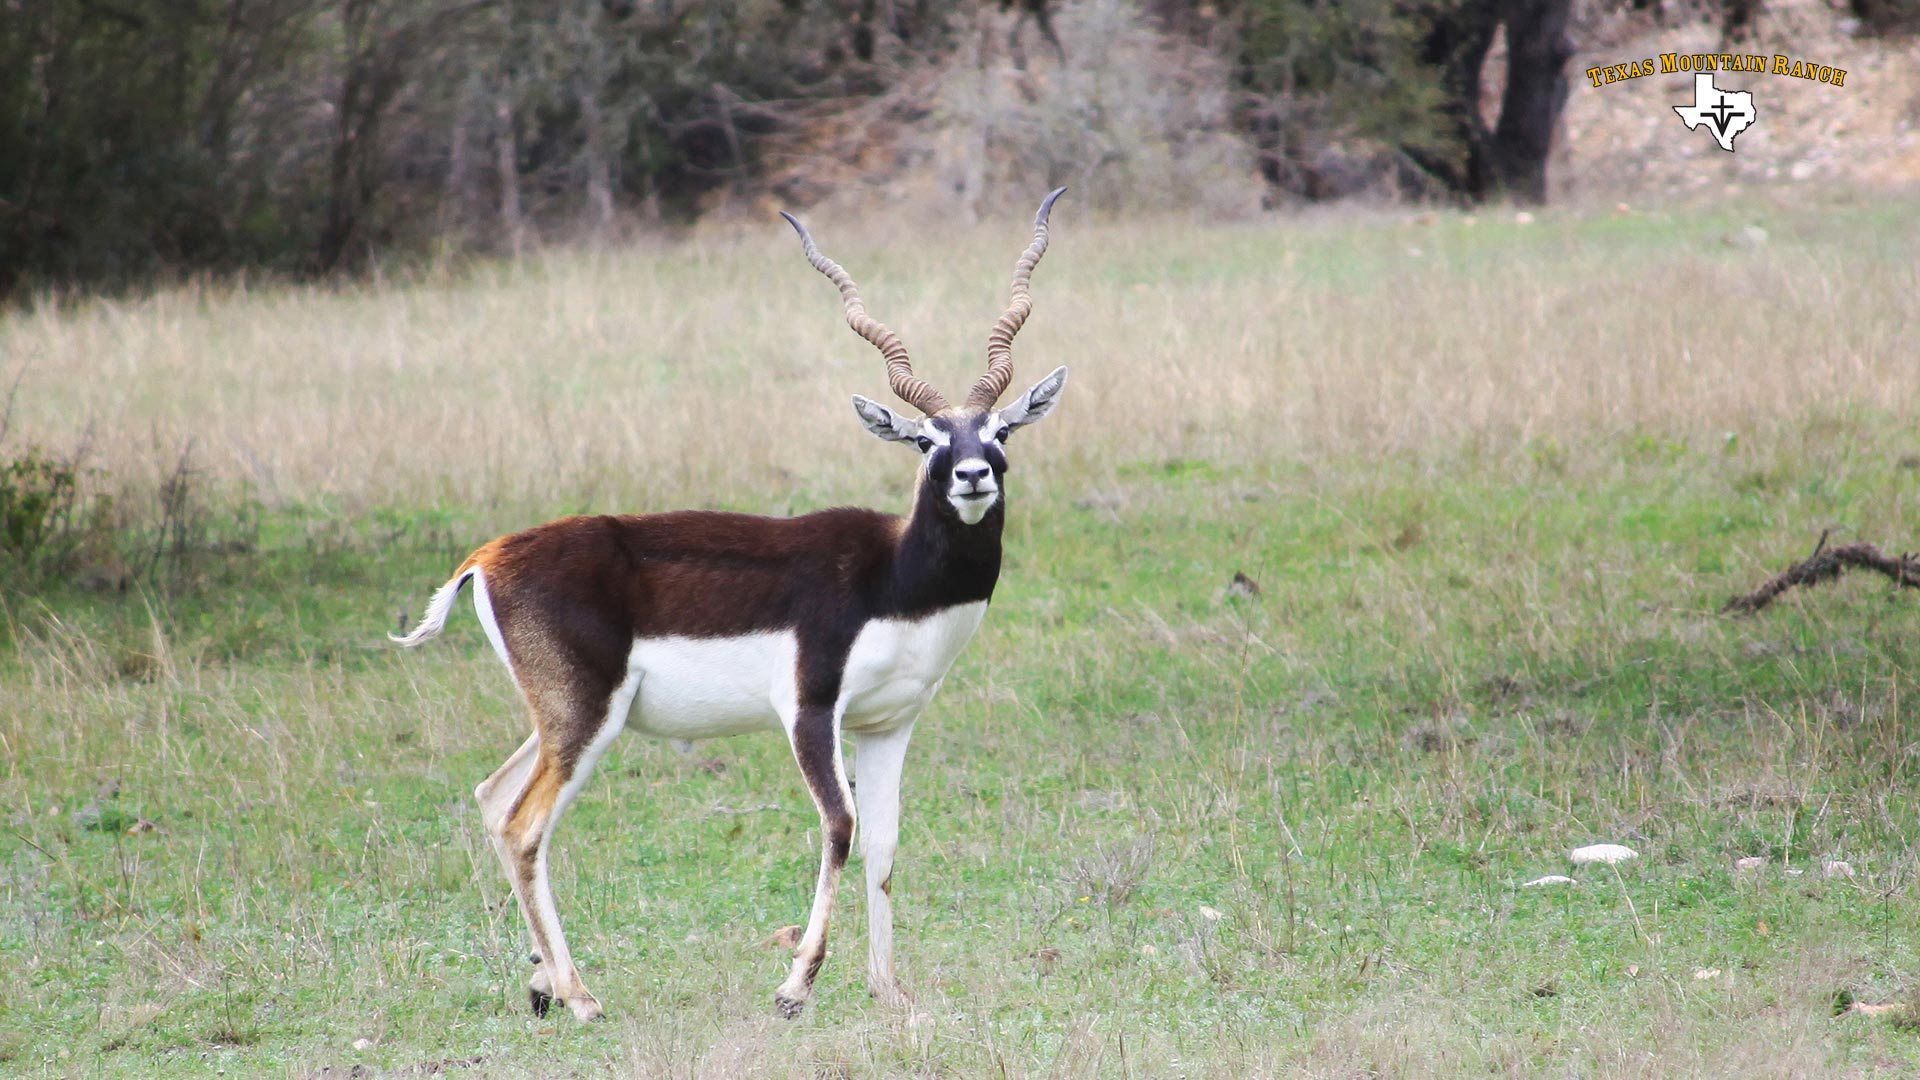 TEXAS MOUNTAIN RANCH | Blackbuck Antelope Hunts